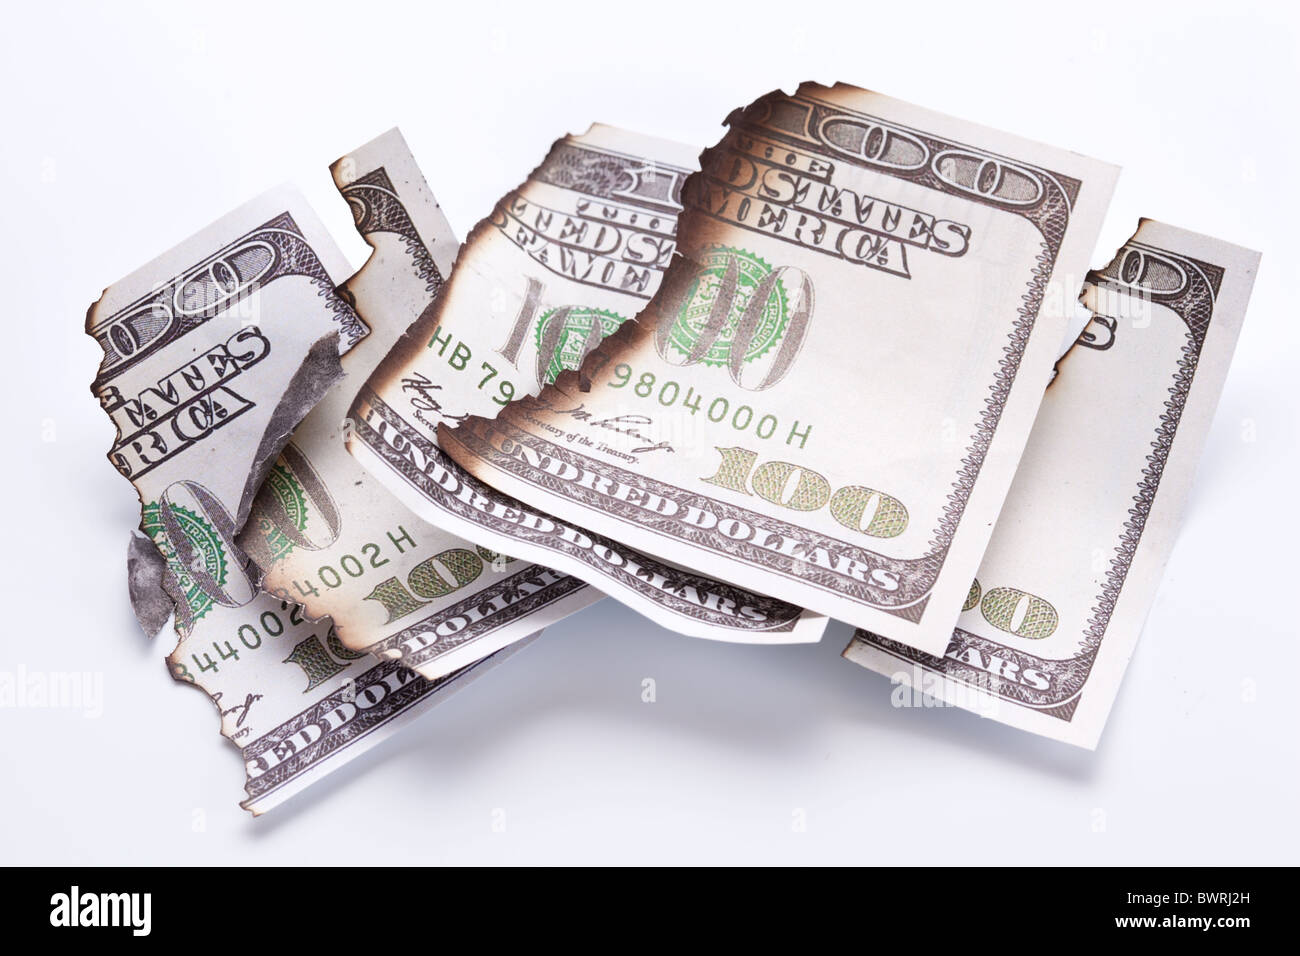 burned dollar bills on white background Stock Photo